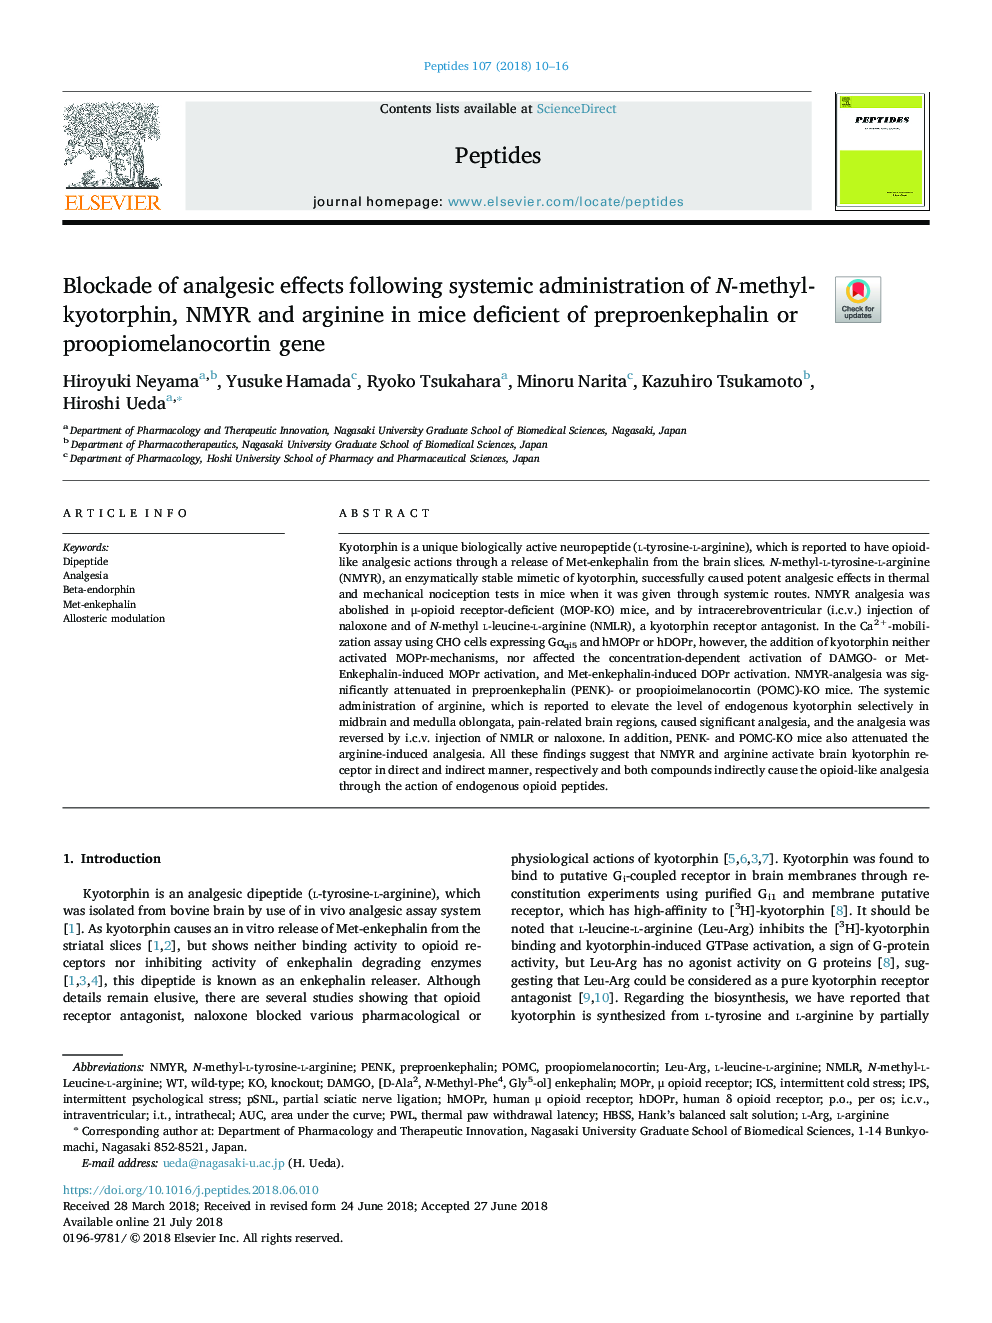 Blockade of analgesic effects following systemic administration of N-methyl-kyotorphin, NMYR and arginine in mice deficient of preproenkephalin or proopiomelanocortin gene